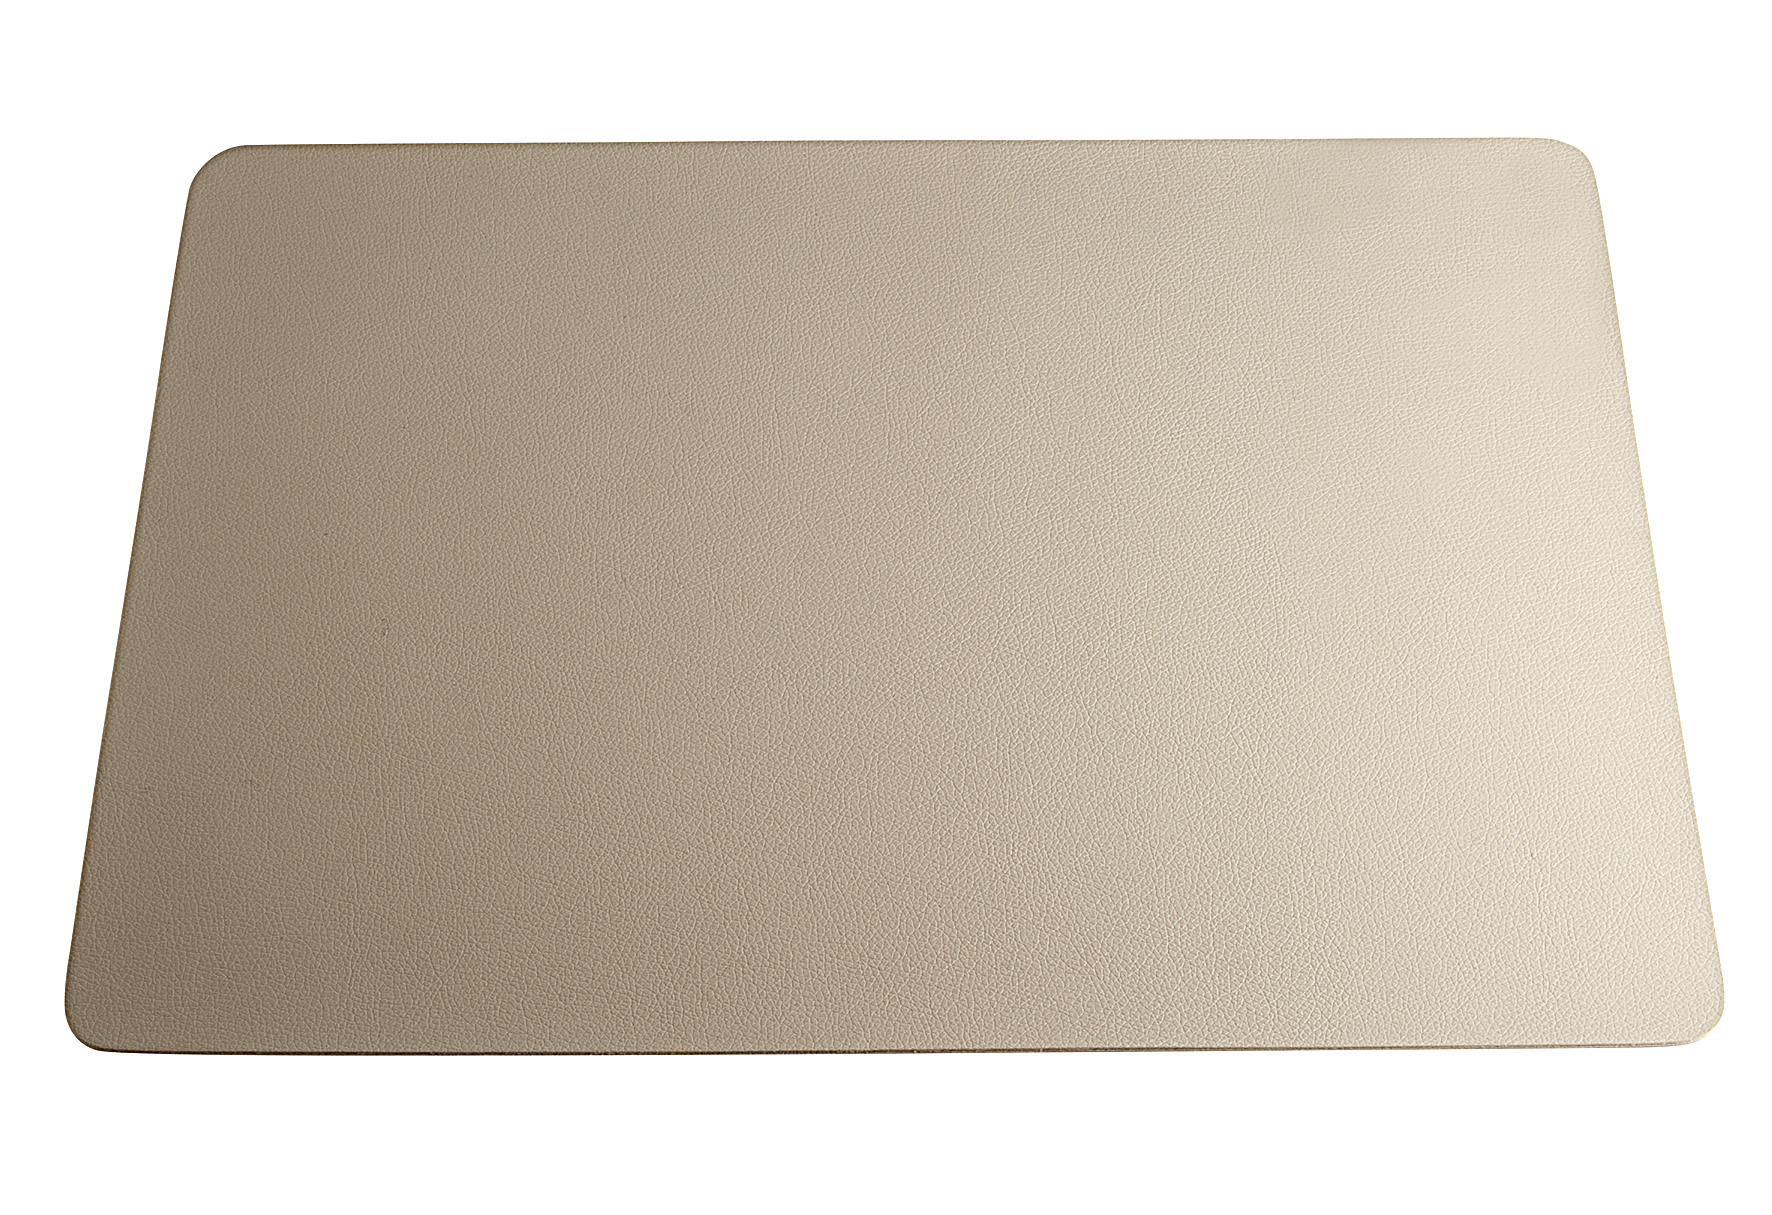  leather optic fine Tischset, stone  Breite: 33cm Länge: 46cm 